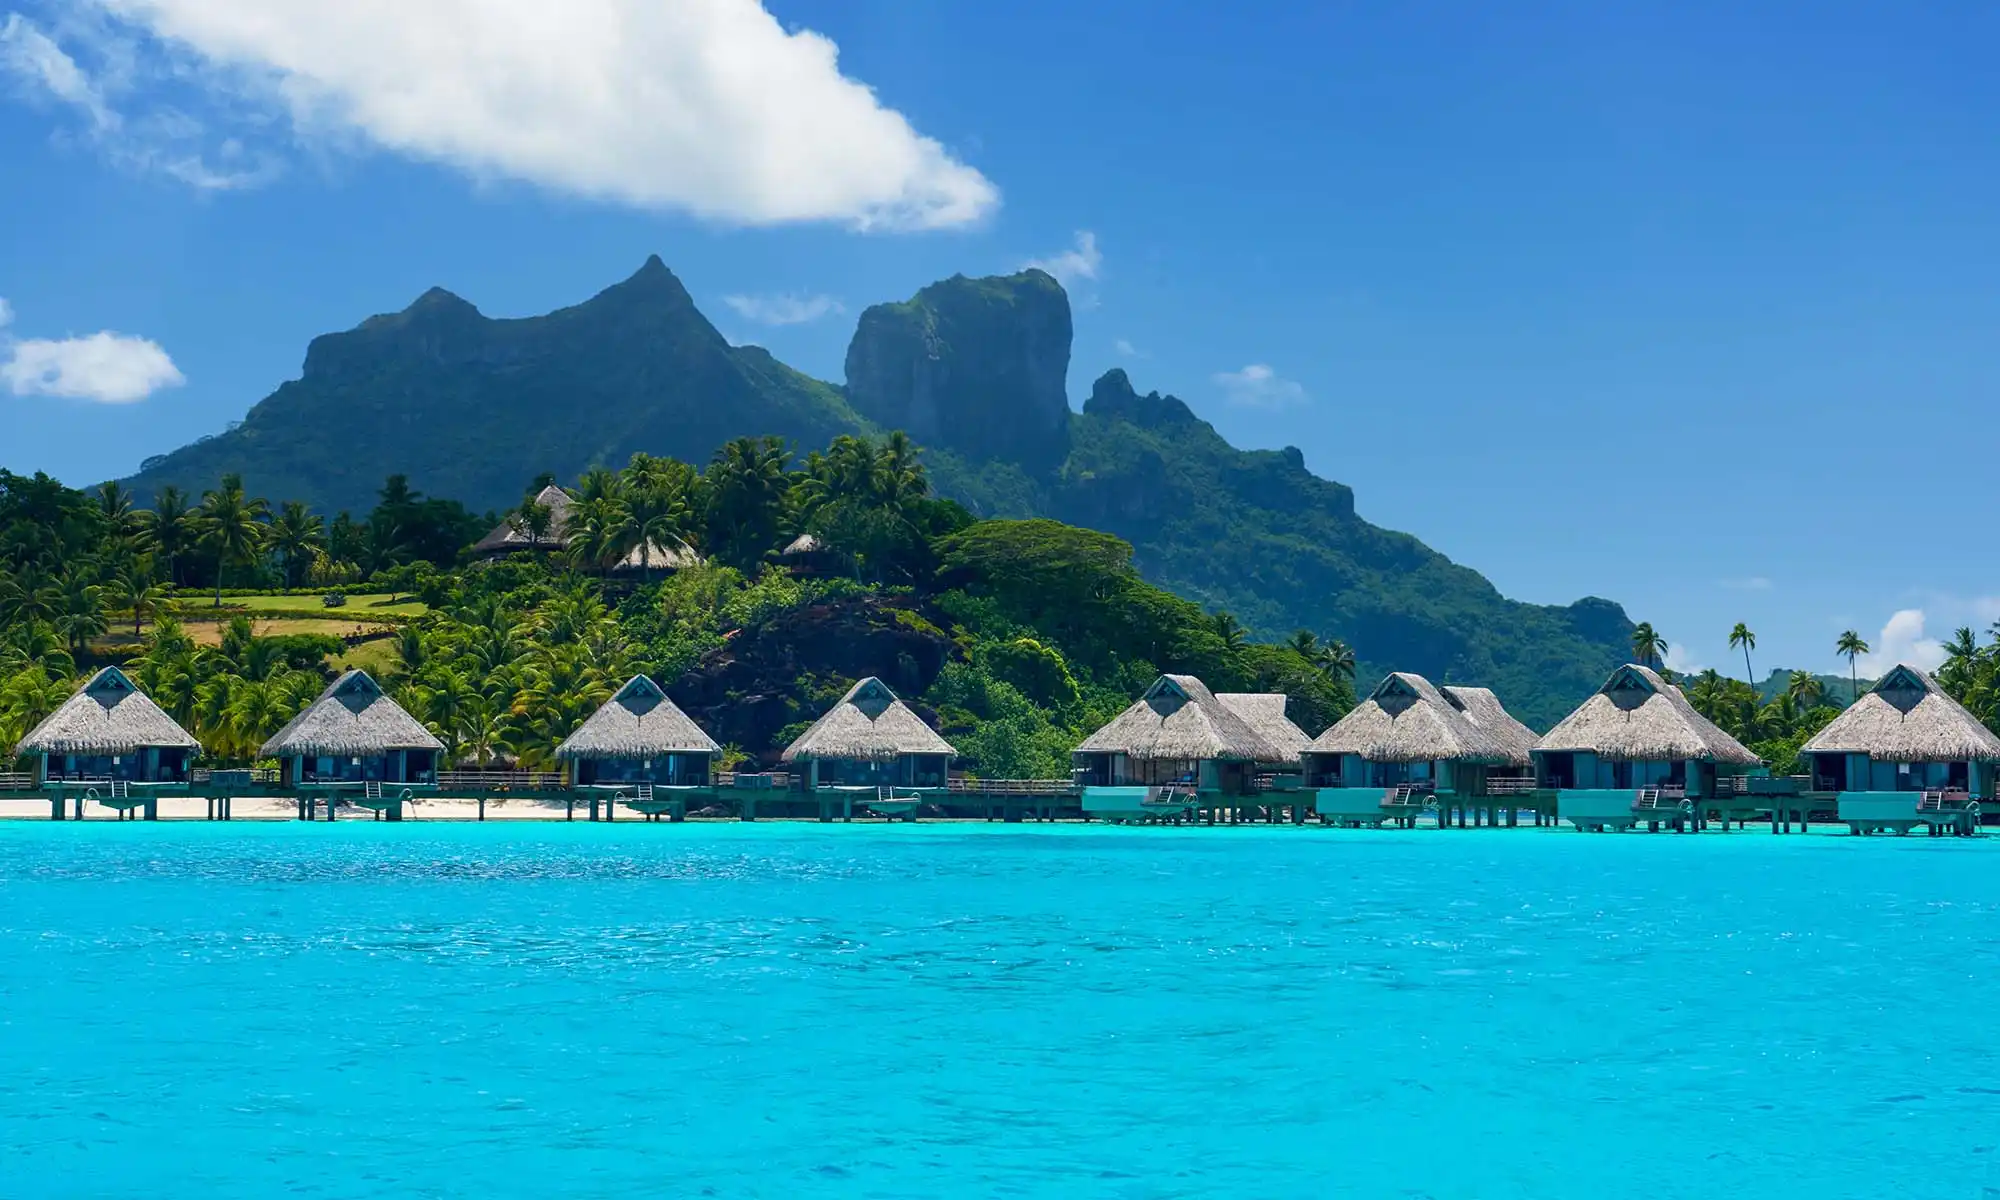 Is Tahiti a Mountainous Island?